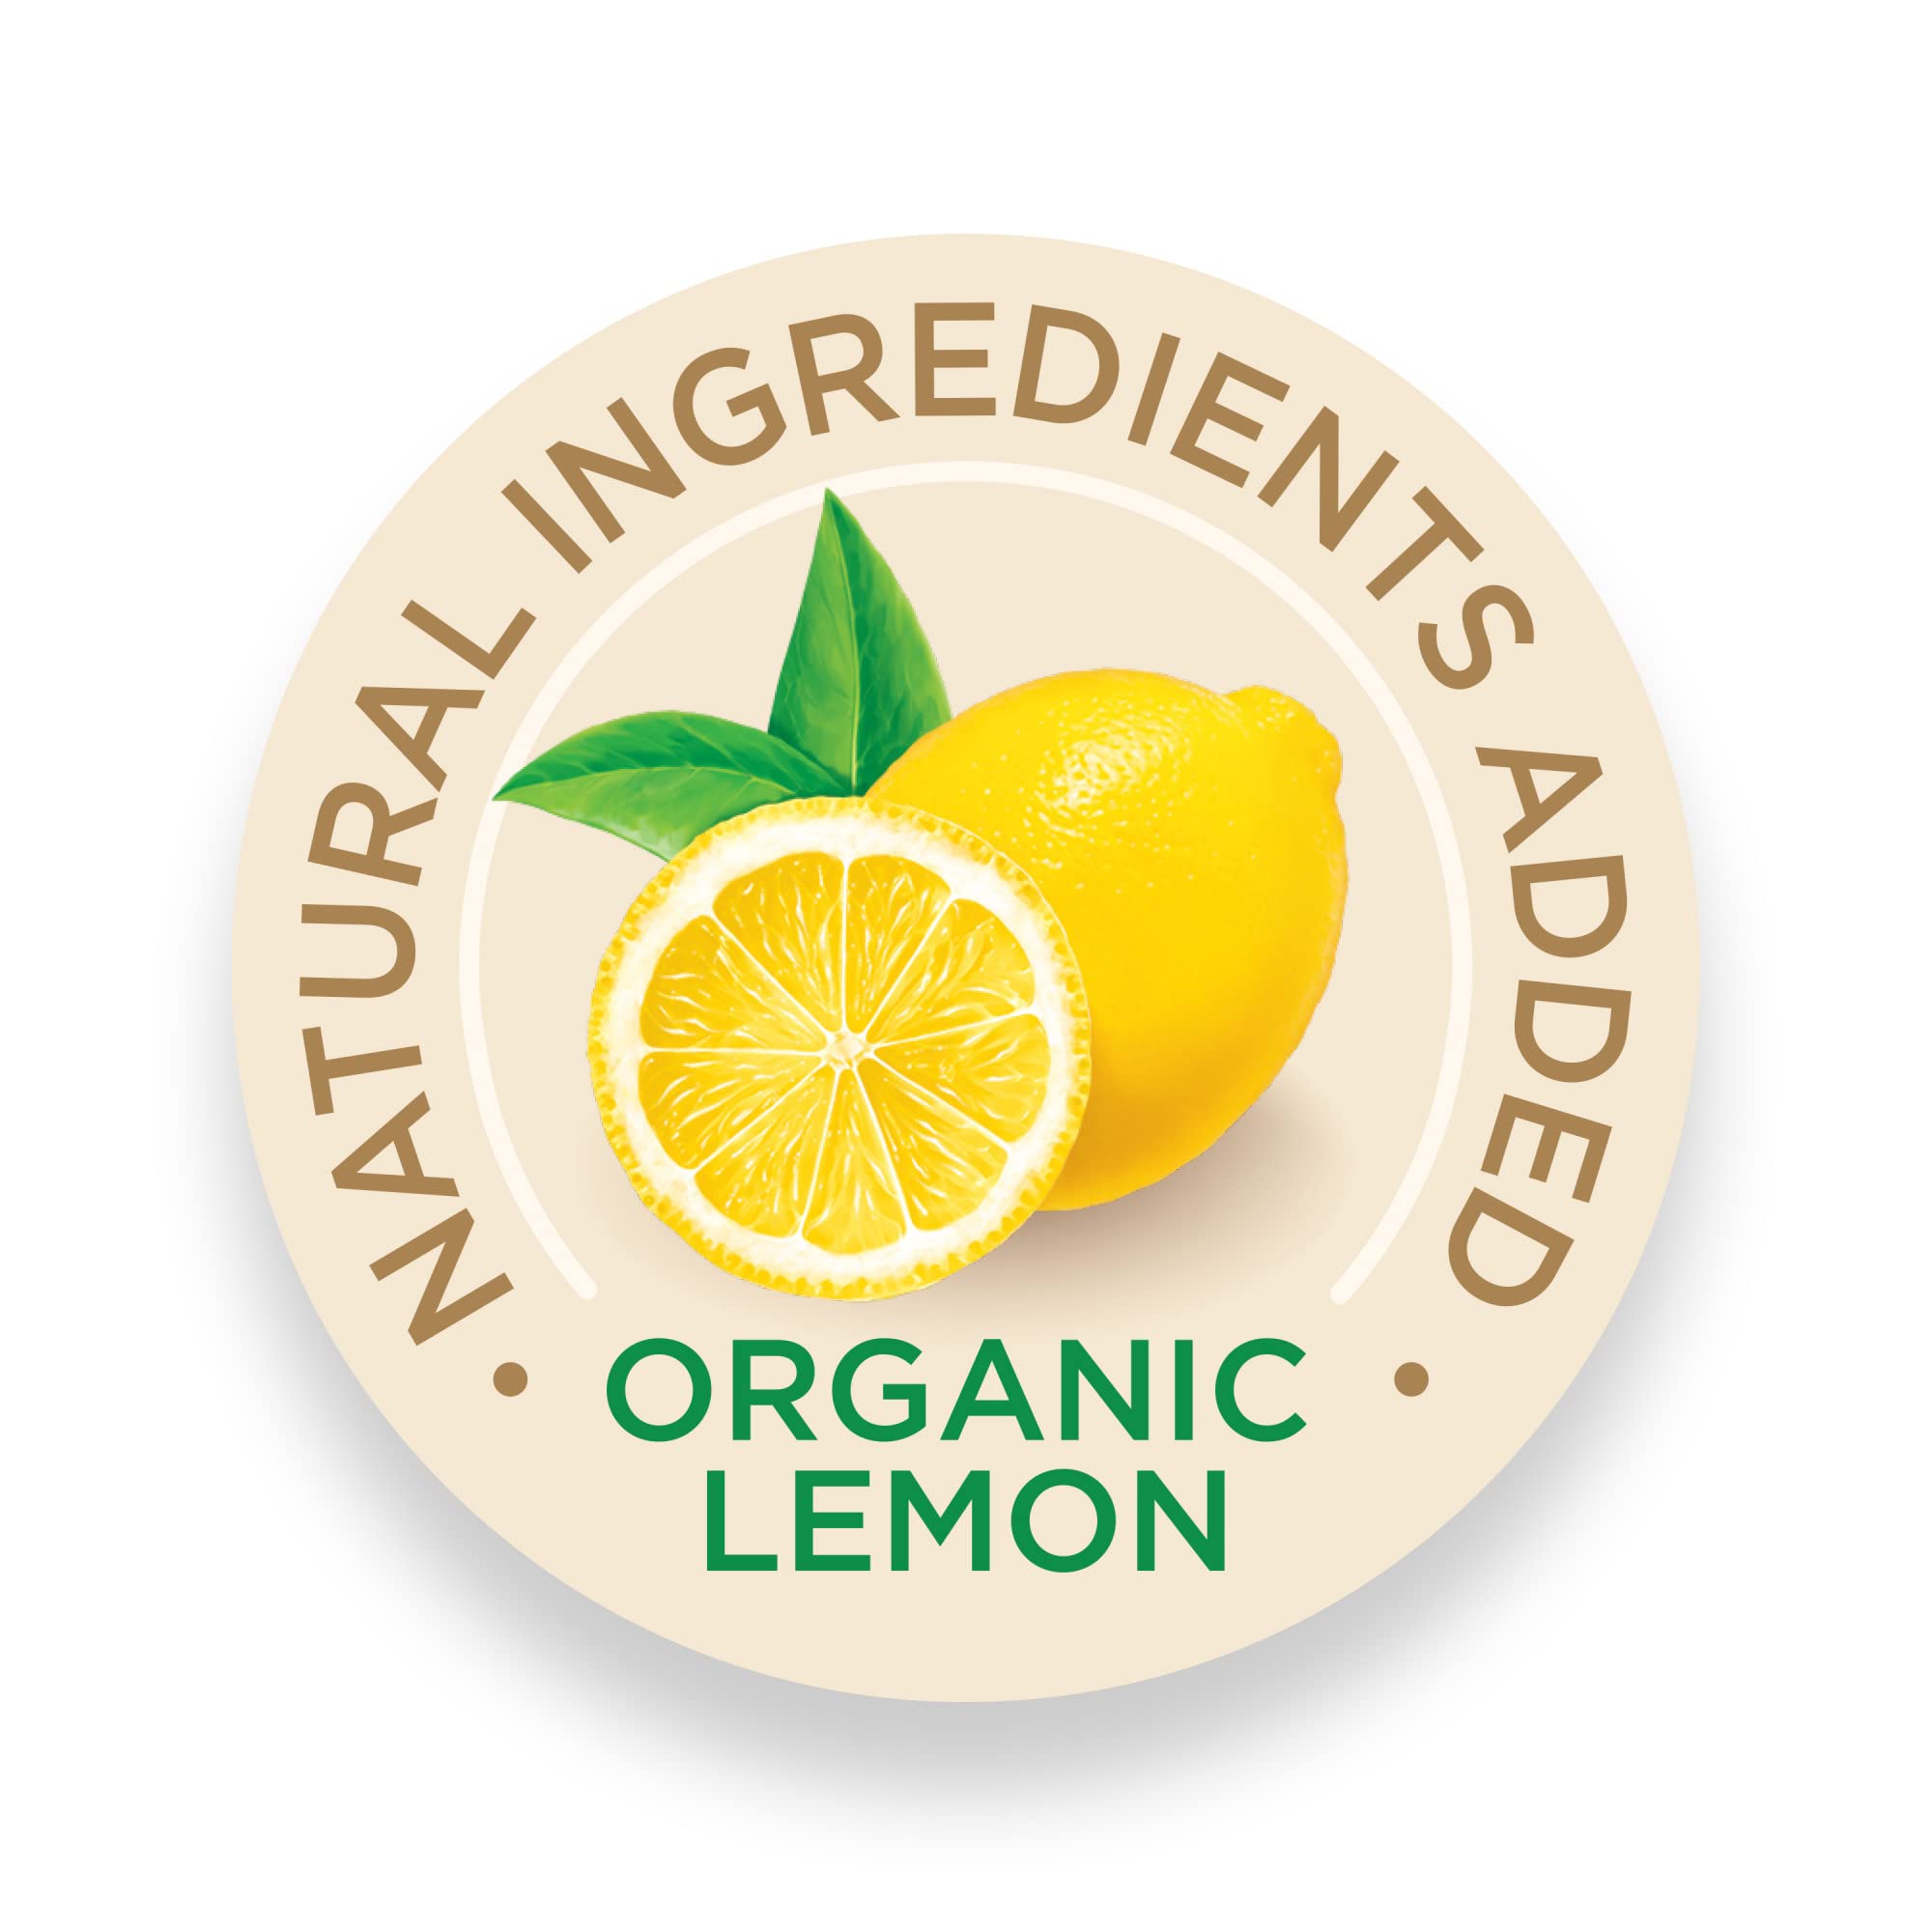 Schick Intuition Lemon Berry Breeze Razors for Women | 1 Razor & 2 Intuition Razor Blades Refill with Organic Lemon